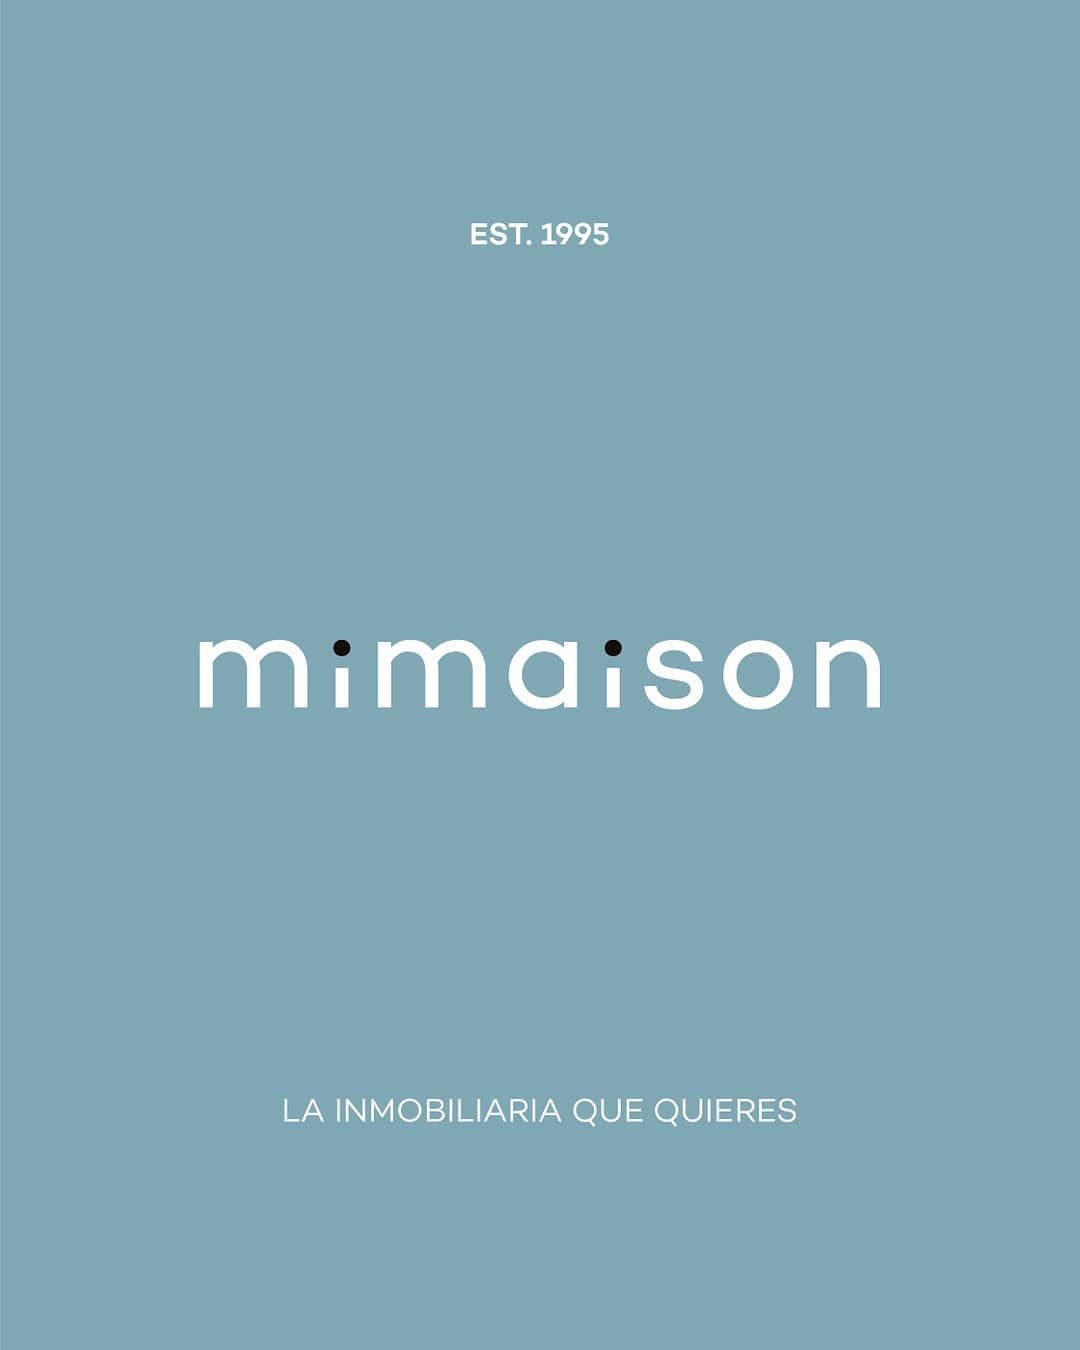 Mimaison - Creación de Nombre - Naming - Diseño de Branding - Inmobiliaria - Madrid